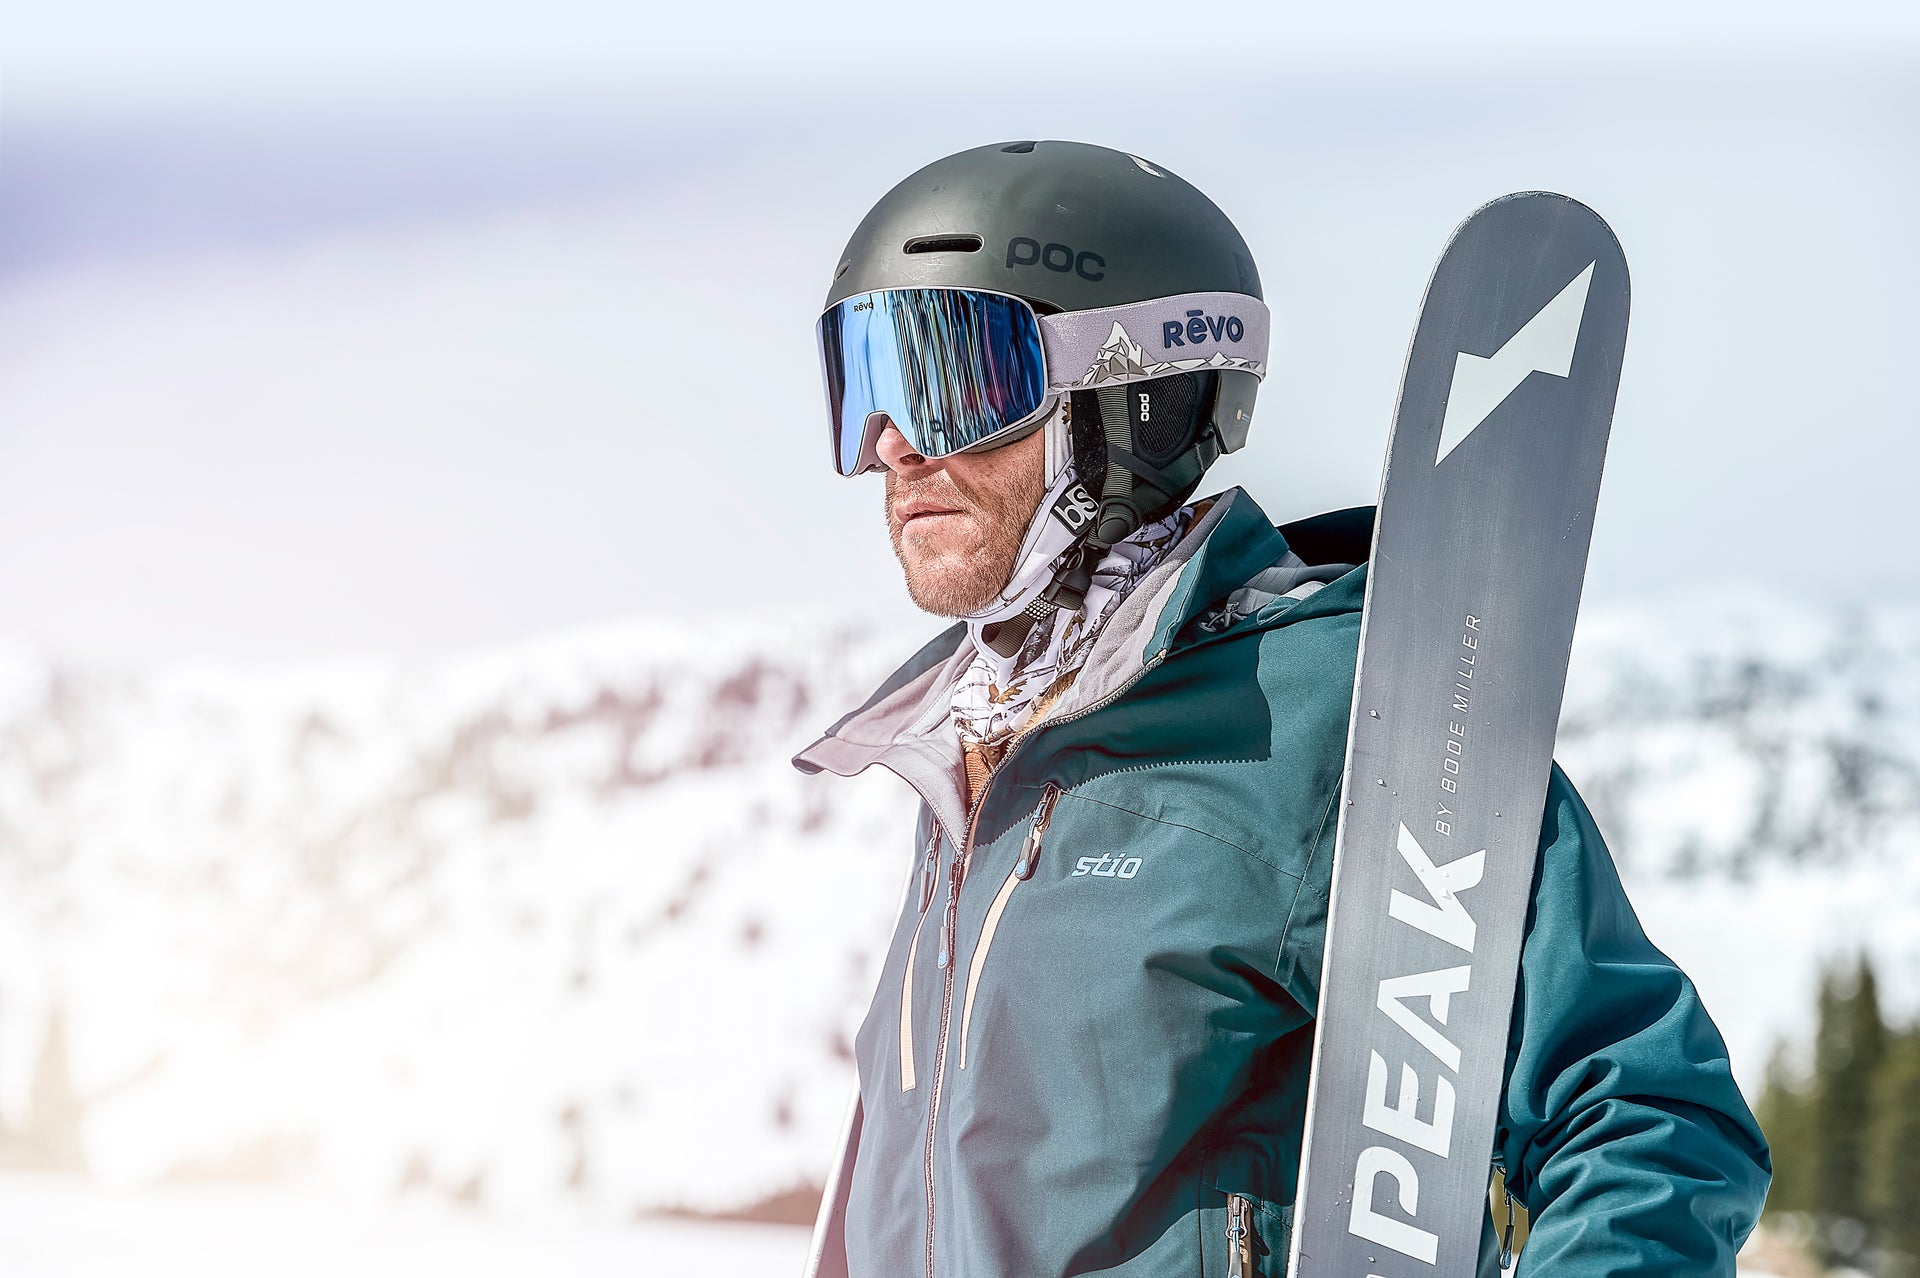 Peak by Bode Miller – Peak Ski Company